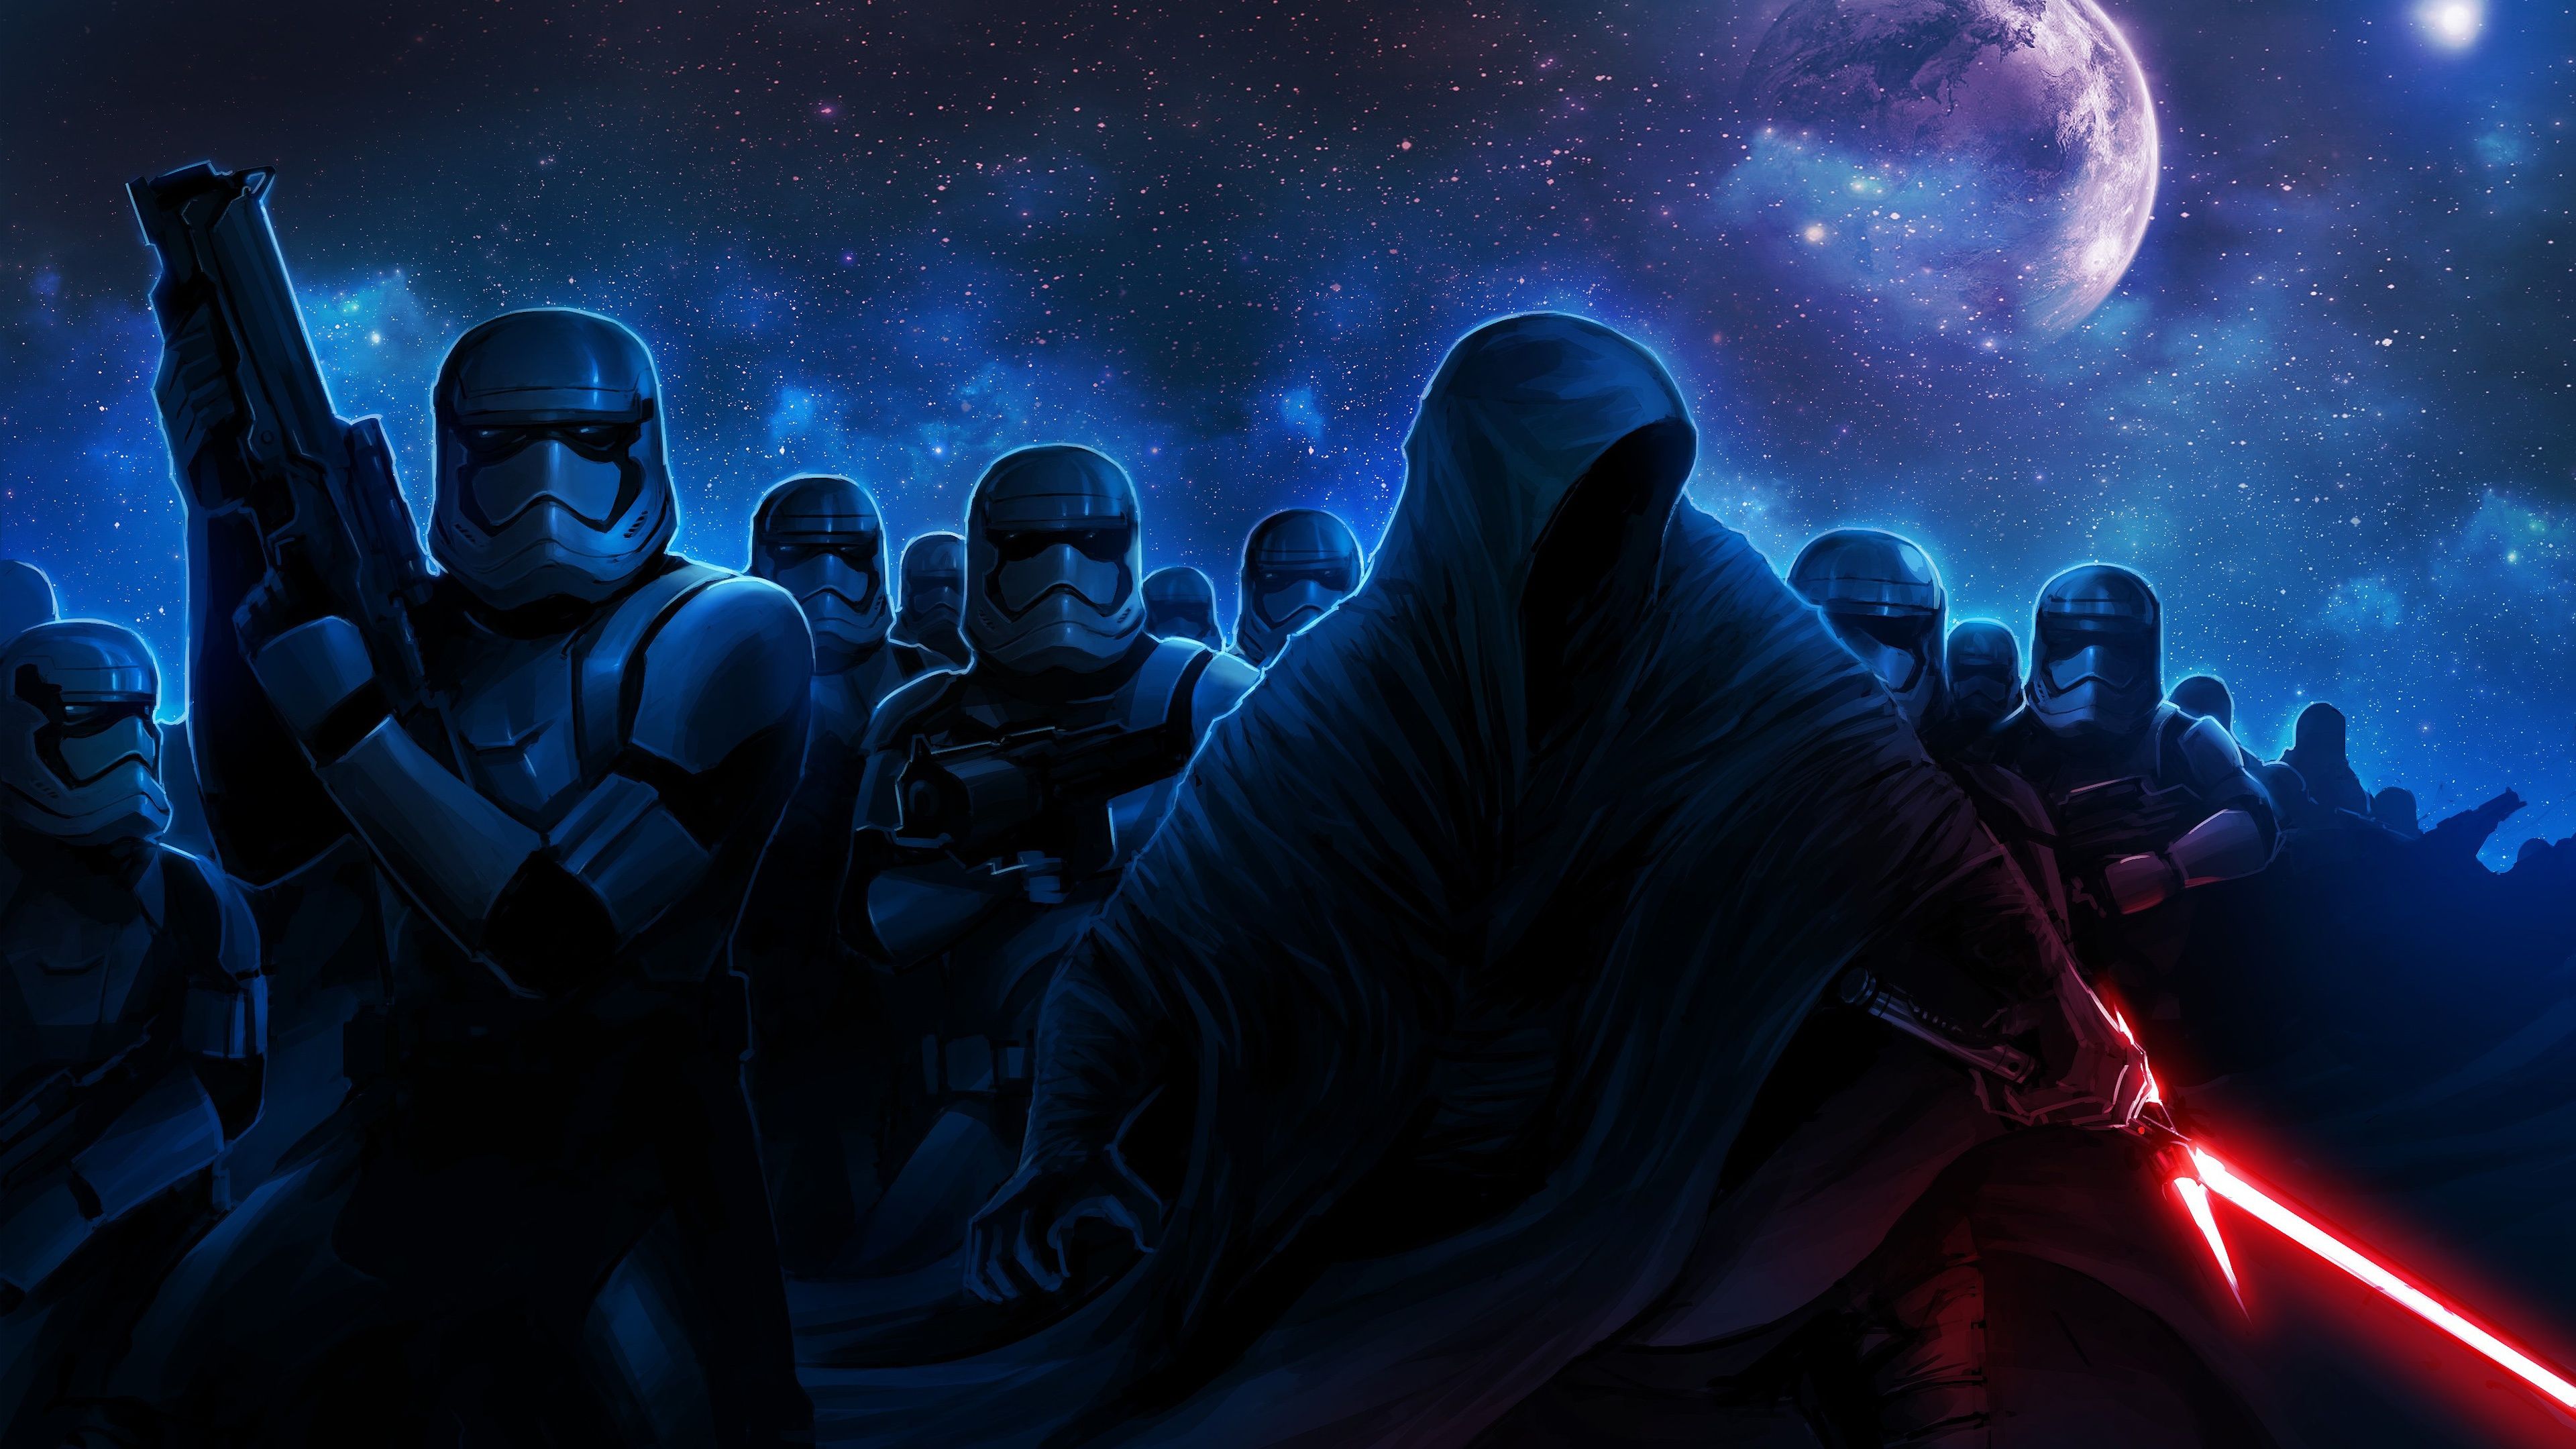 Stormtroopers Darth Vader Wallpaper in jpg format for free download